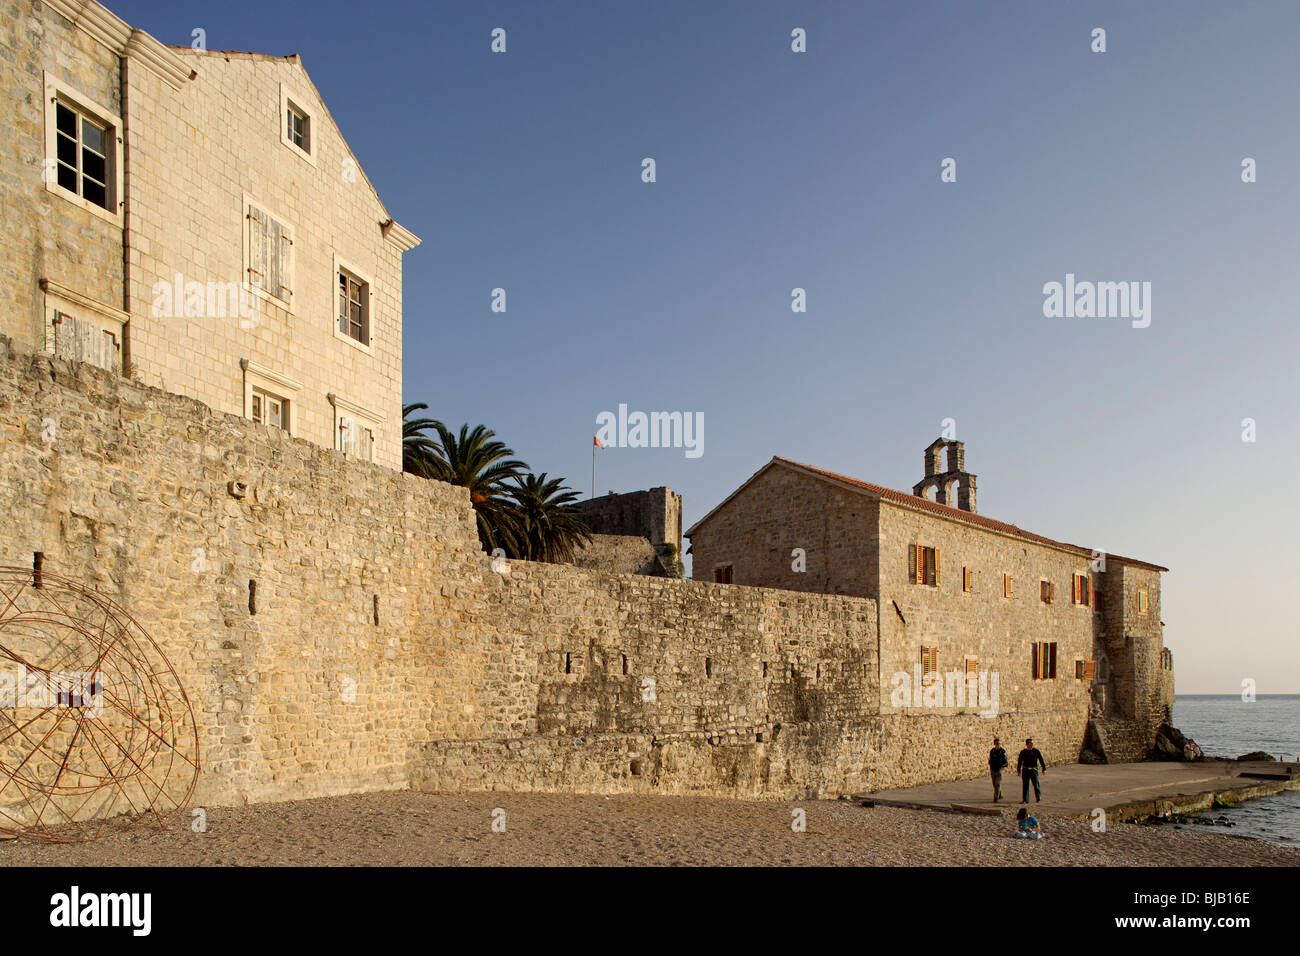 Budva,old town peninsula,fortification walls,Adriatic coast,Montenegro Stock Photo